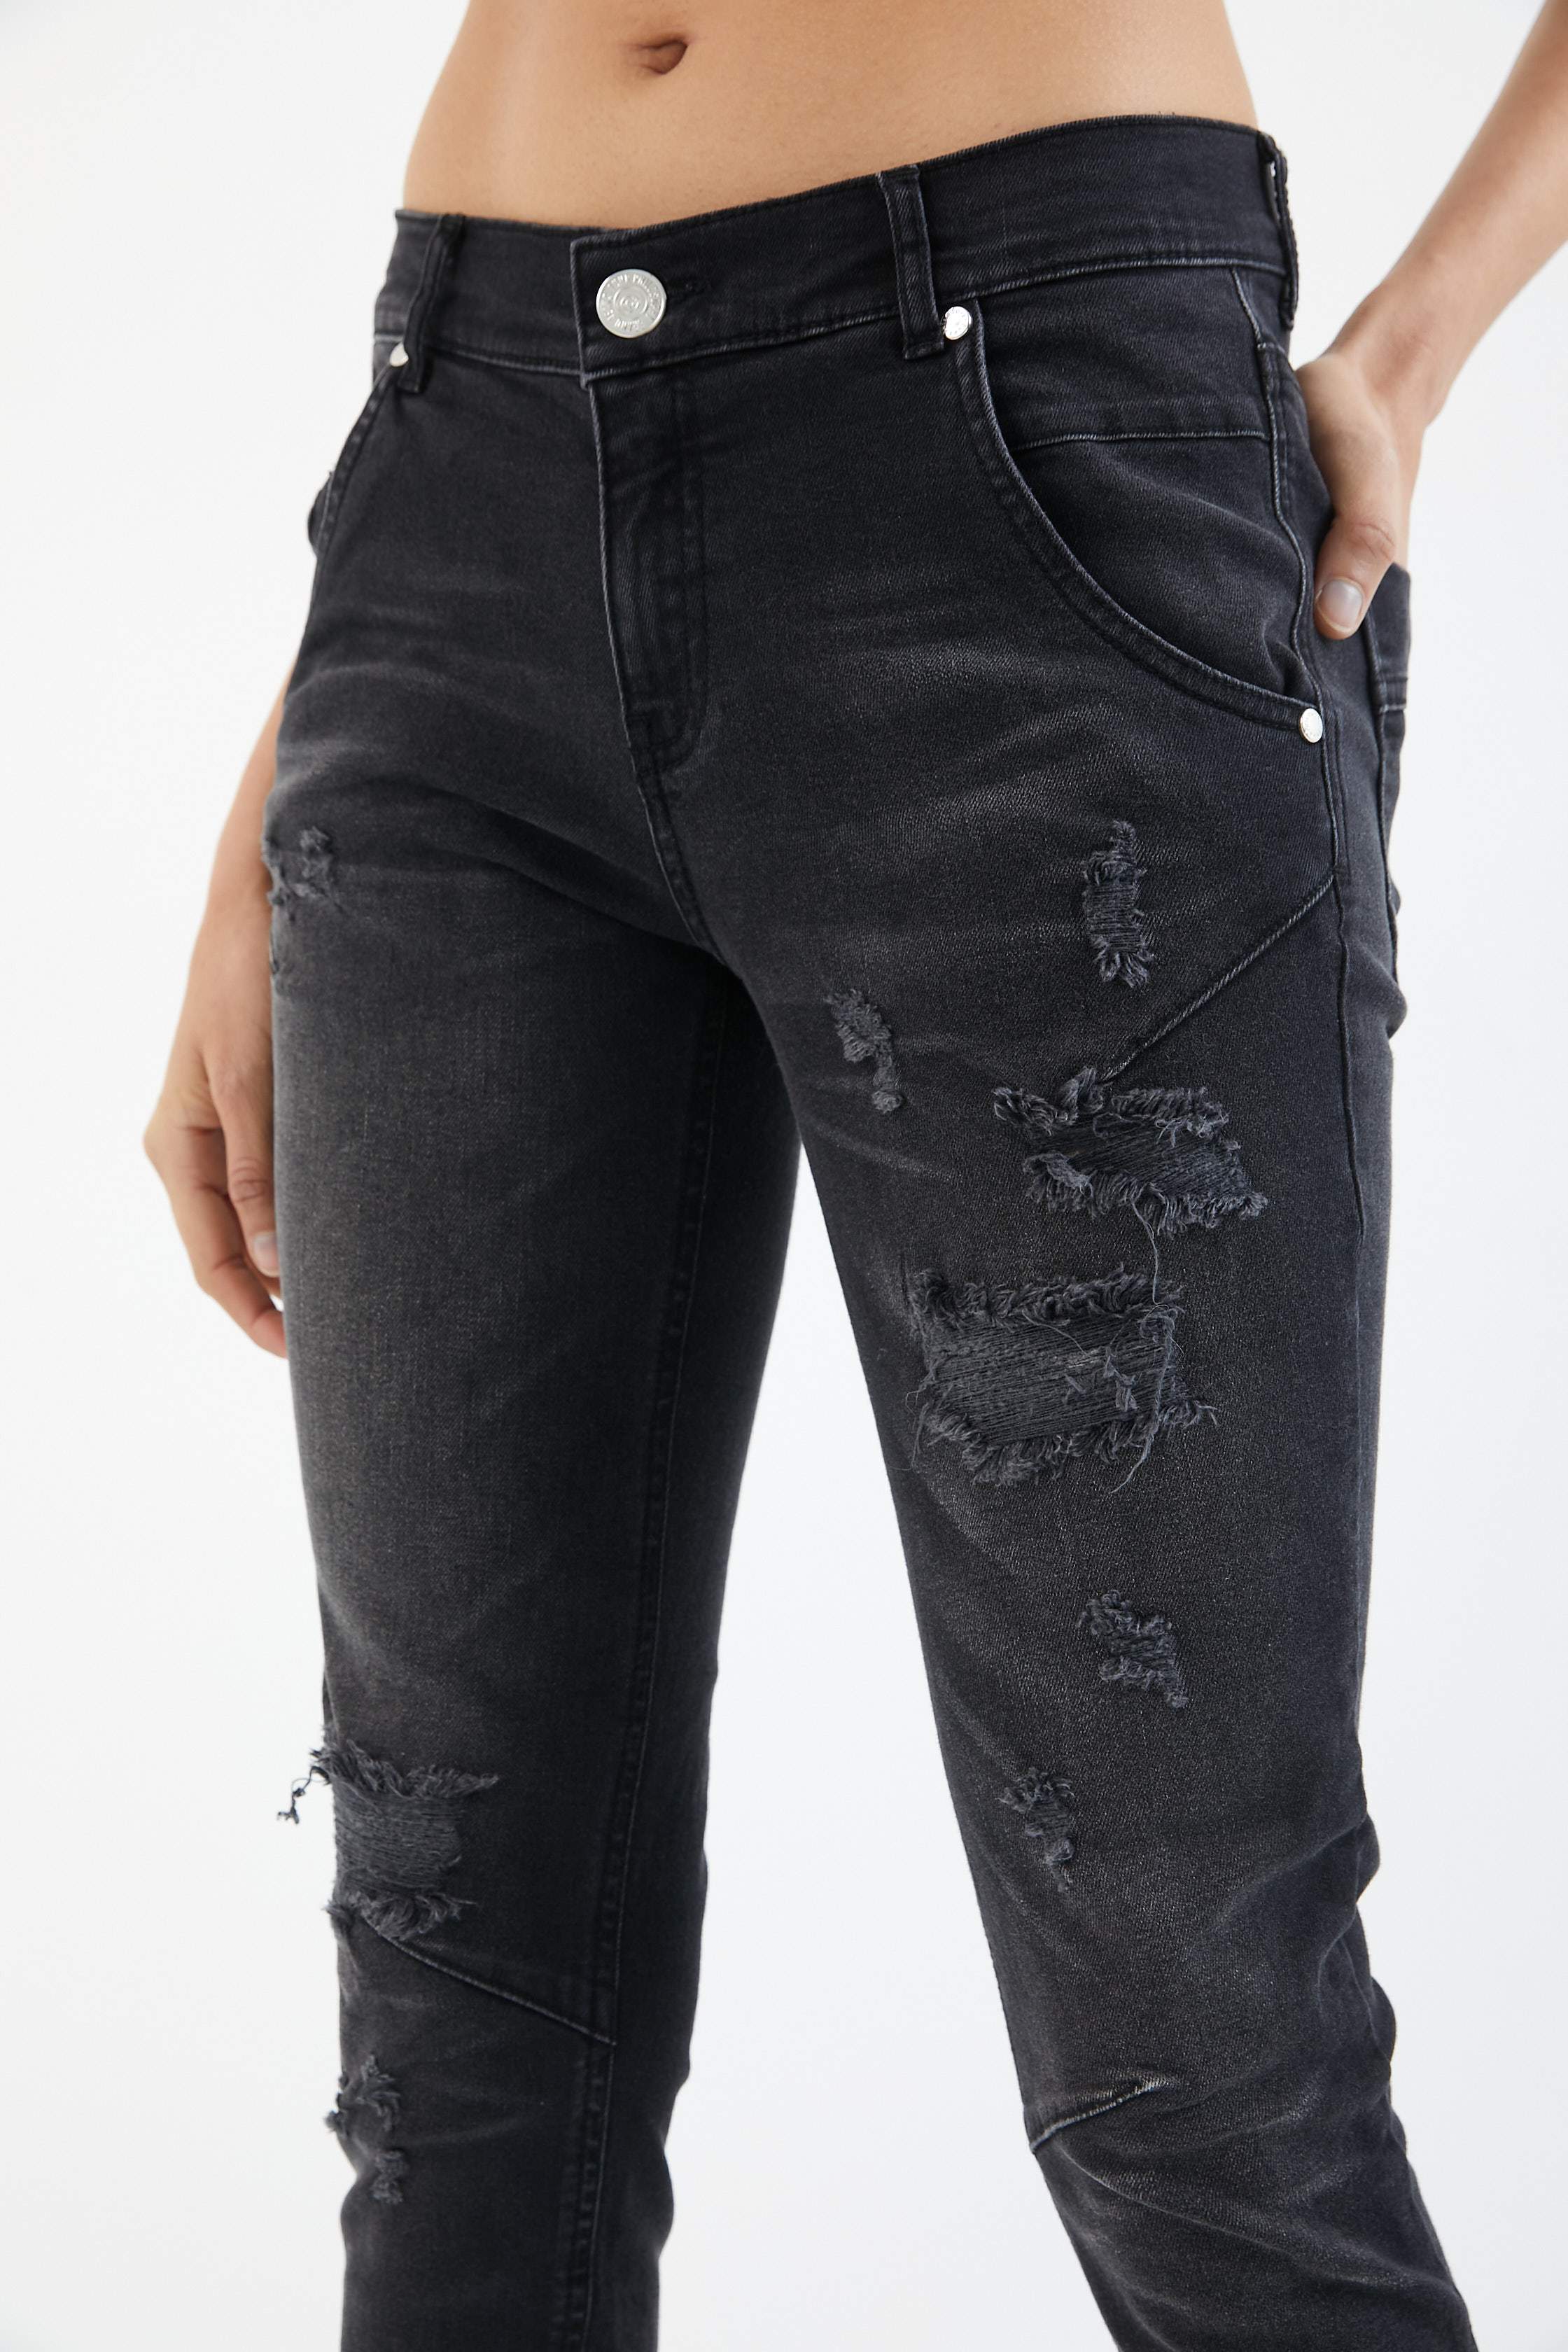 Girlfriend Cut Ripped Jeans - Black 4030